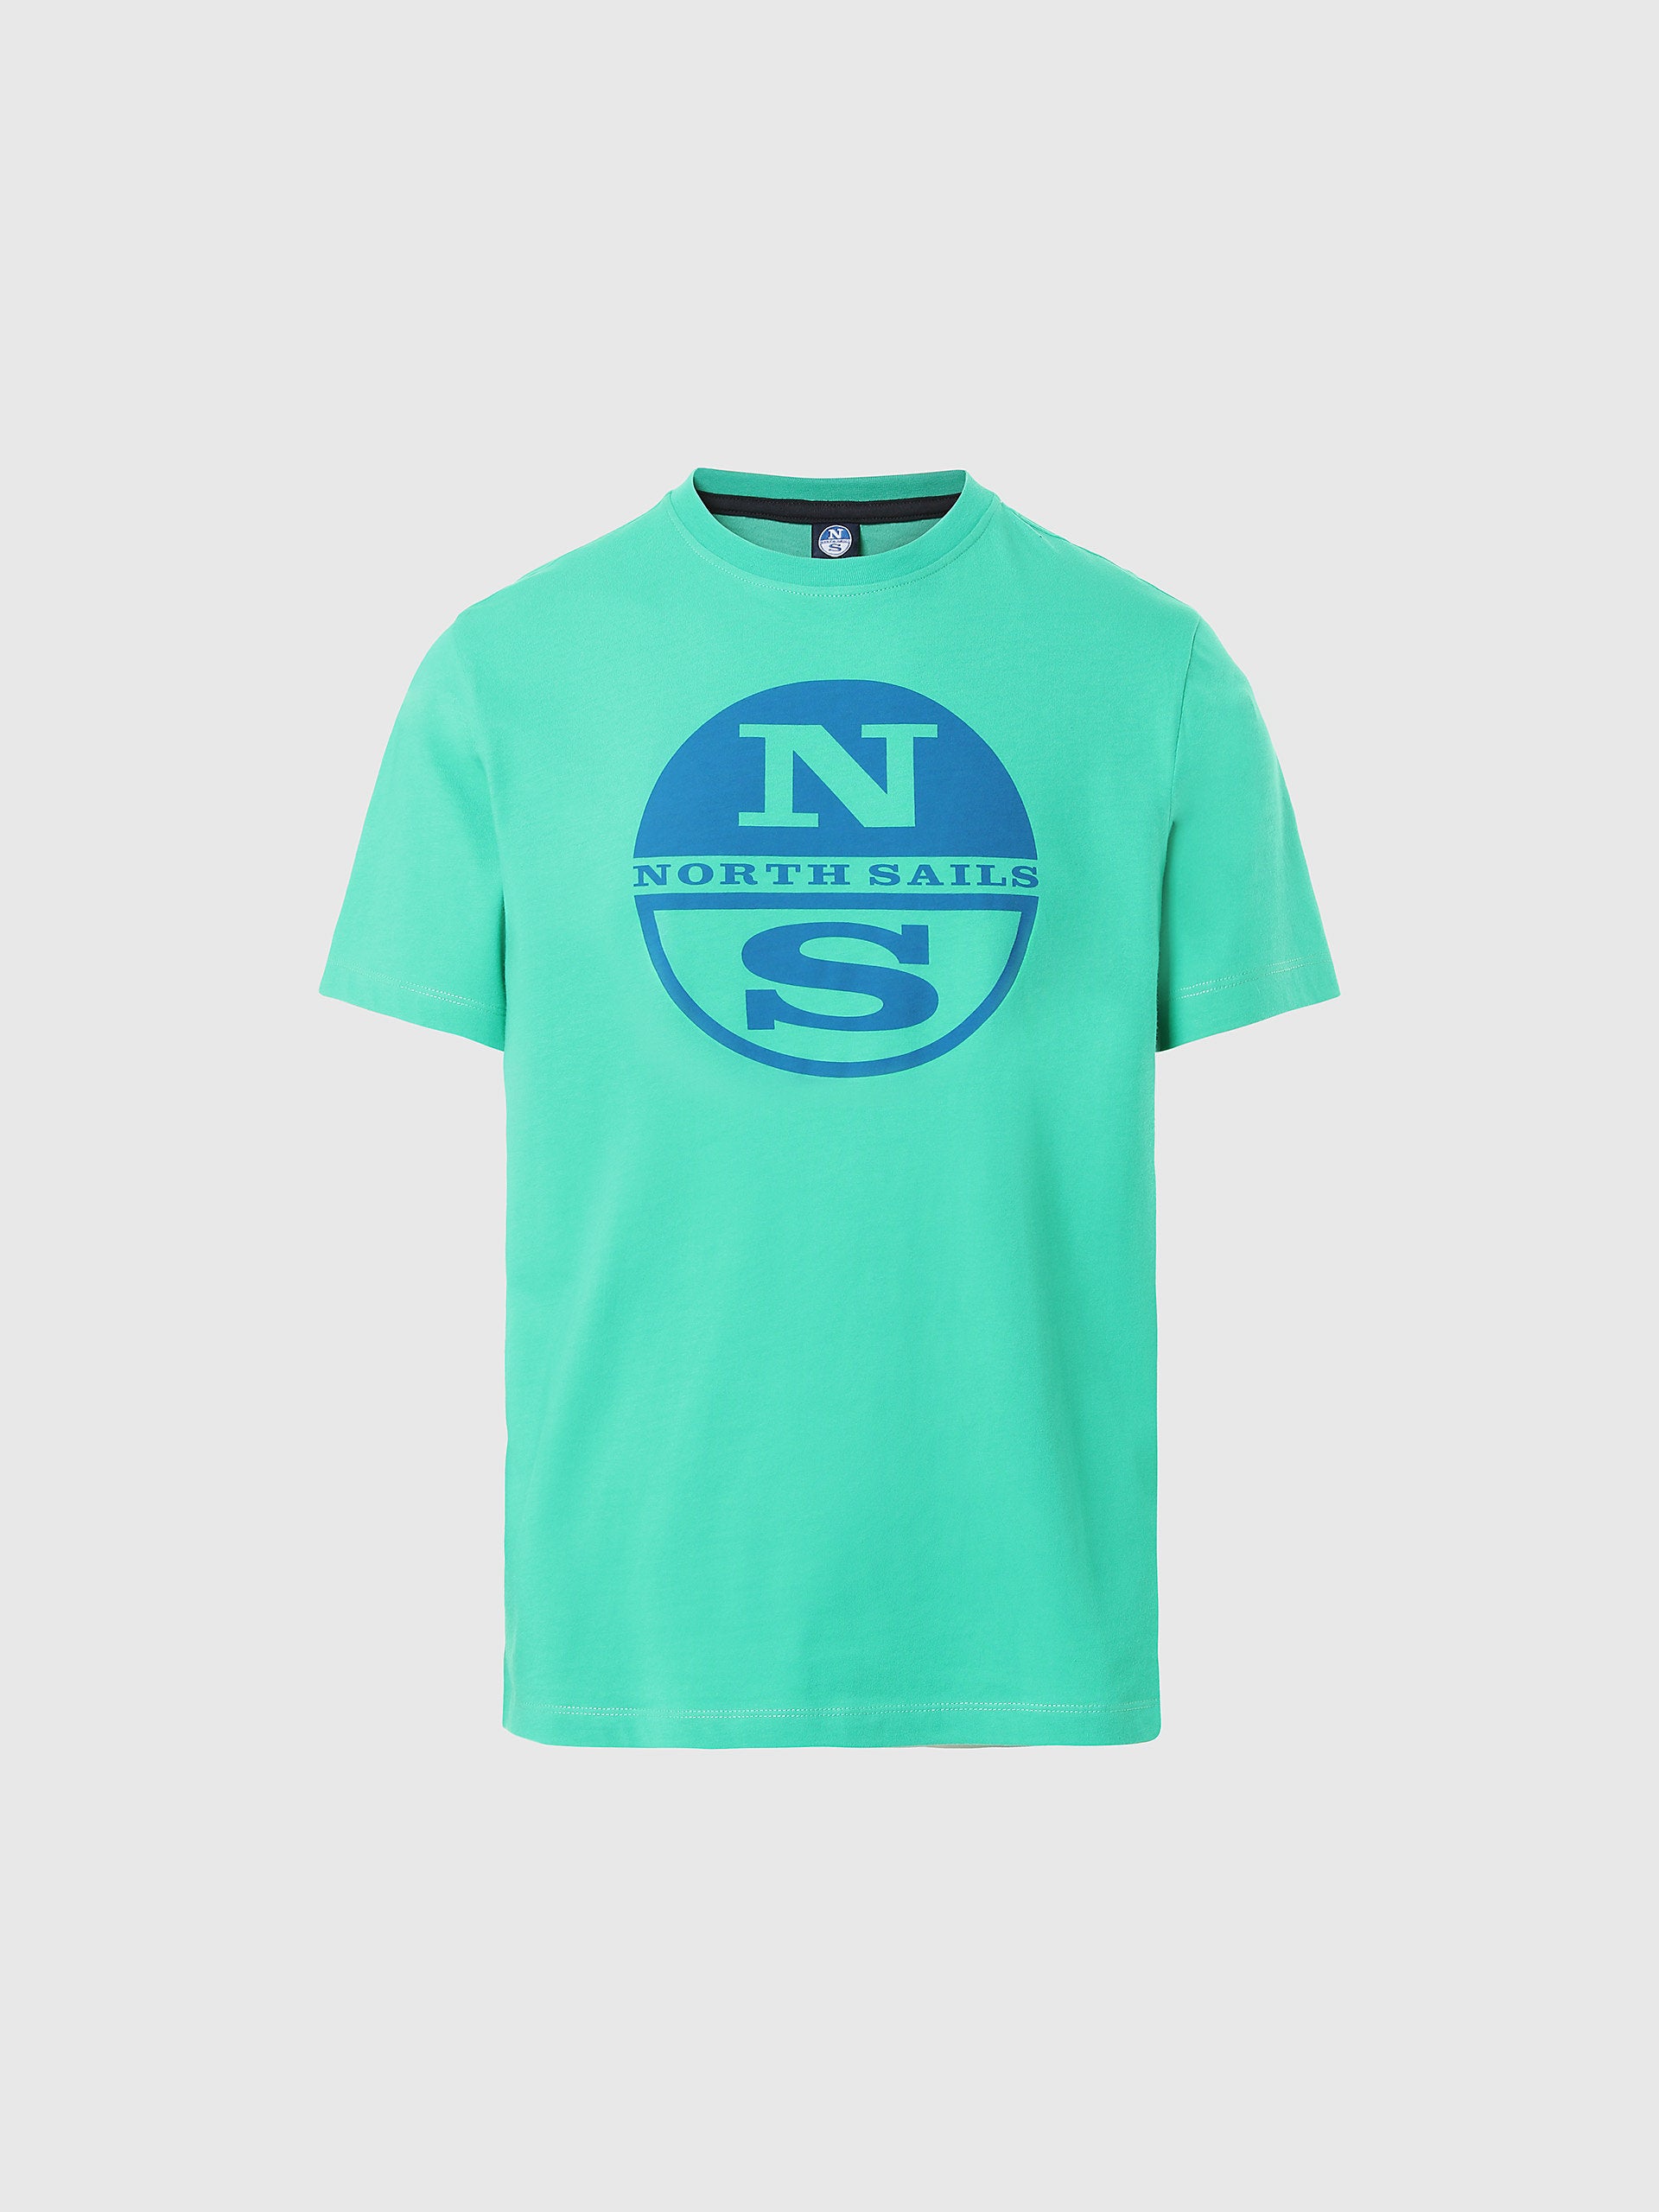 North Sails - T-shirt con stampa maxi logoNorth SailsGarden green3XL